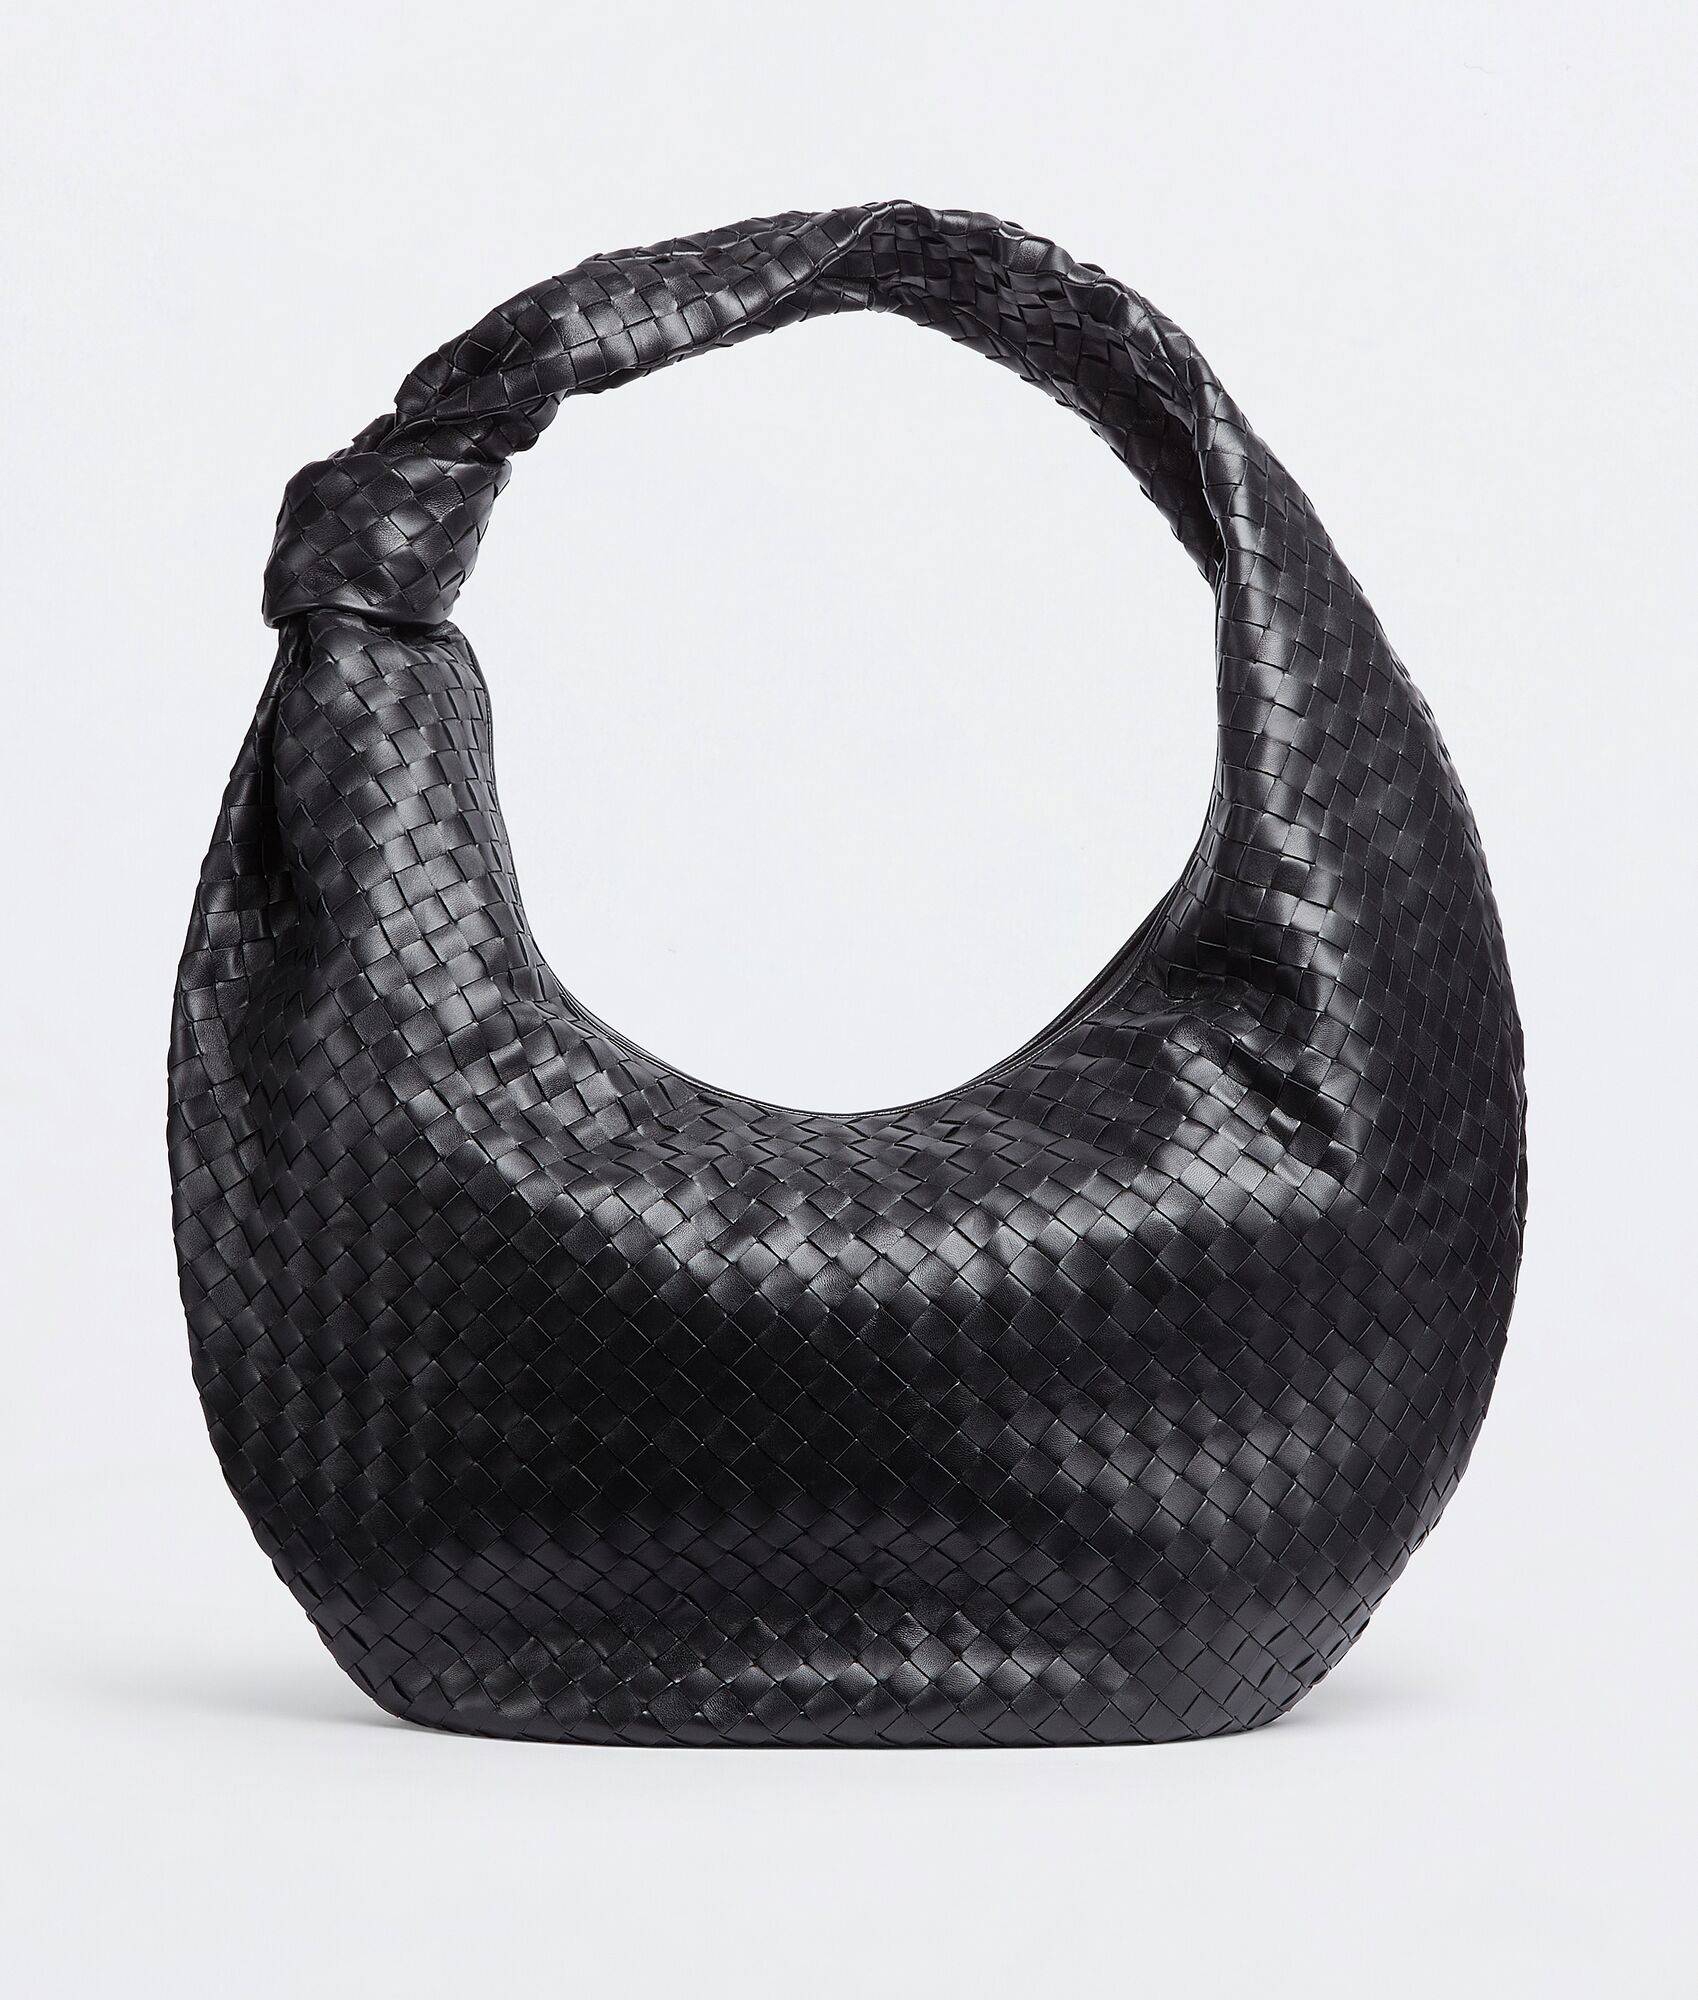 Look: 7 Black Designer Bags You Won't Regret Buying